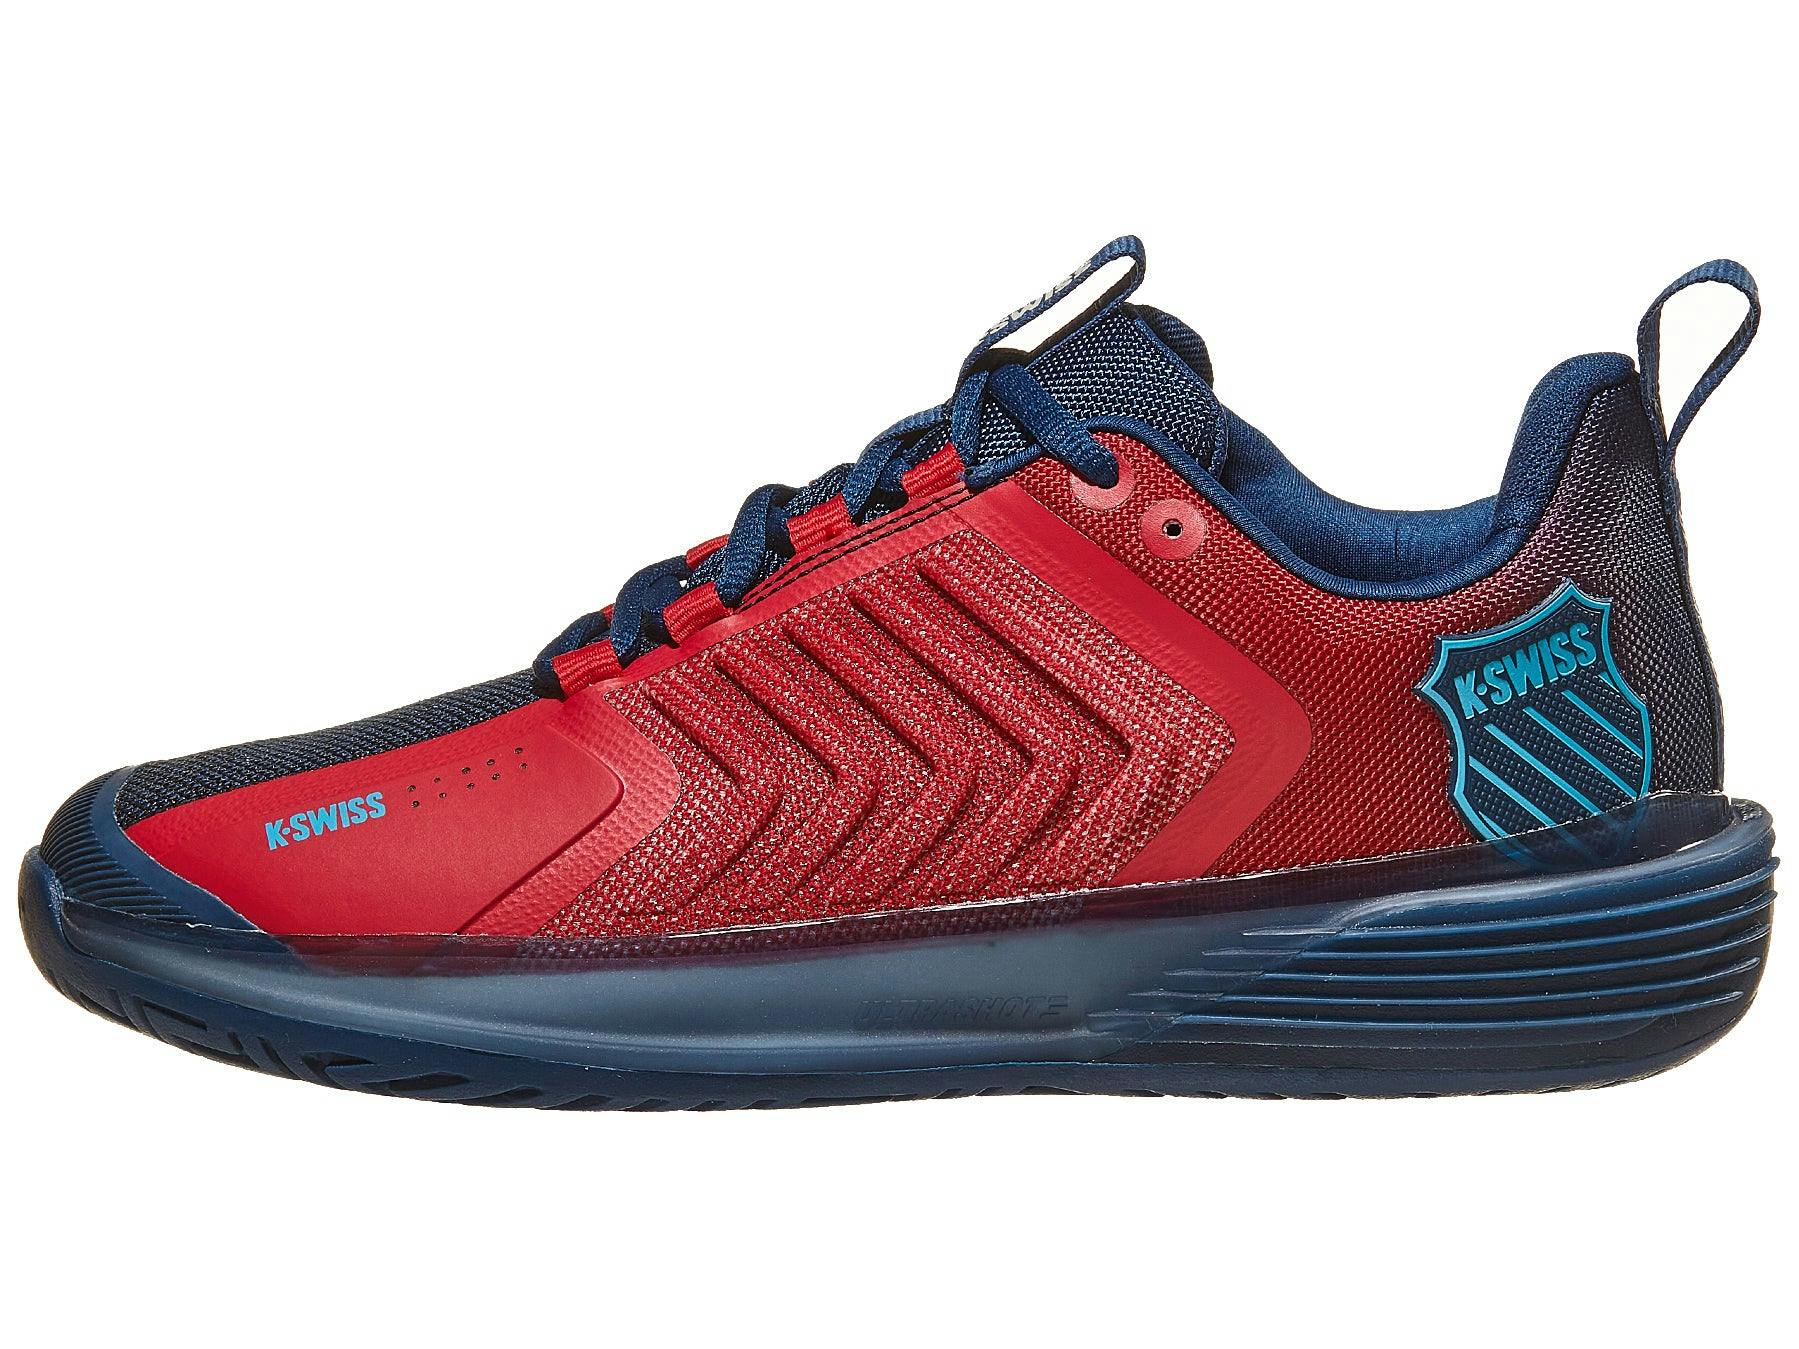 KSwiss Men's Ultrashot 3 Tennis Shoes